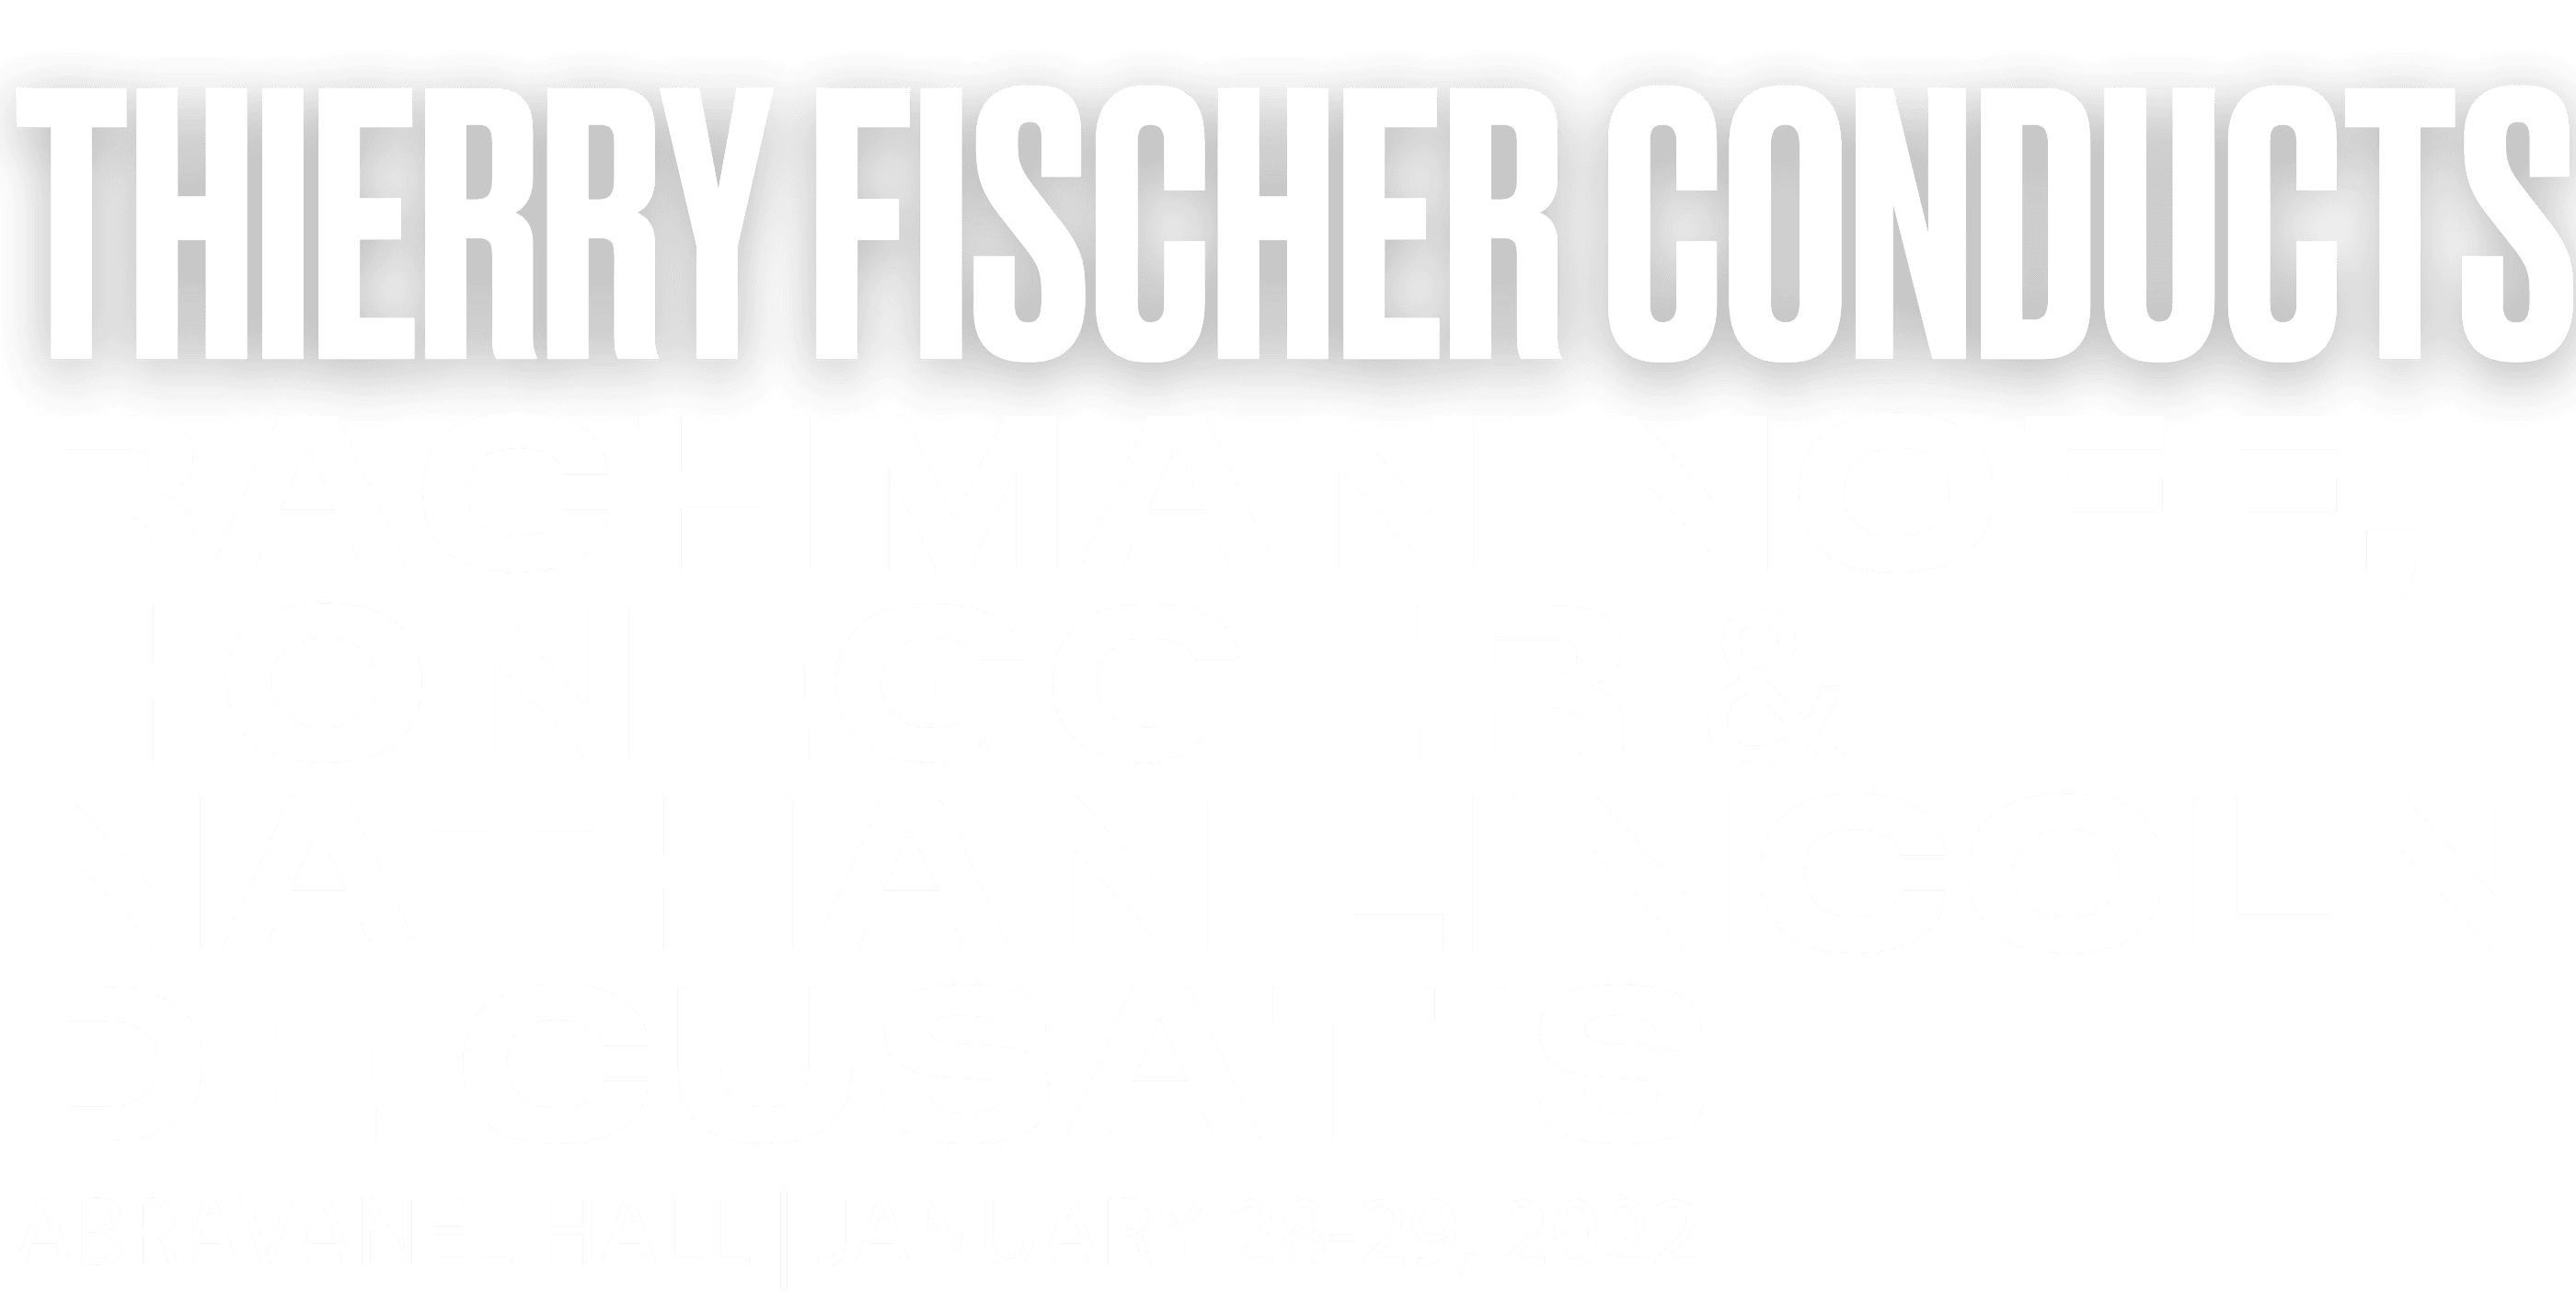 THIERRY FISCHER CONDUCTS RACHMANINOFF, HONEGGER & NATHAN LINCOLN DE CUSATIS